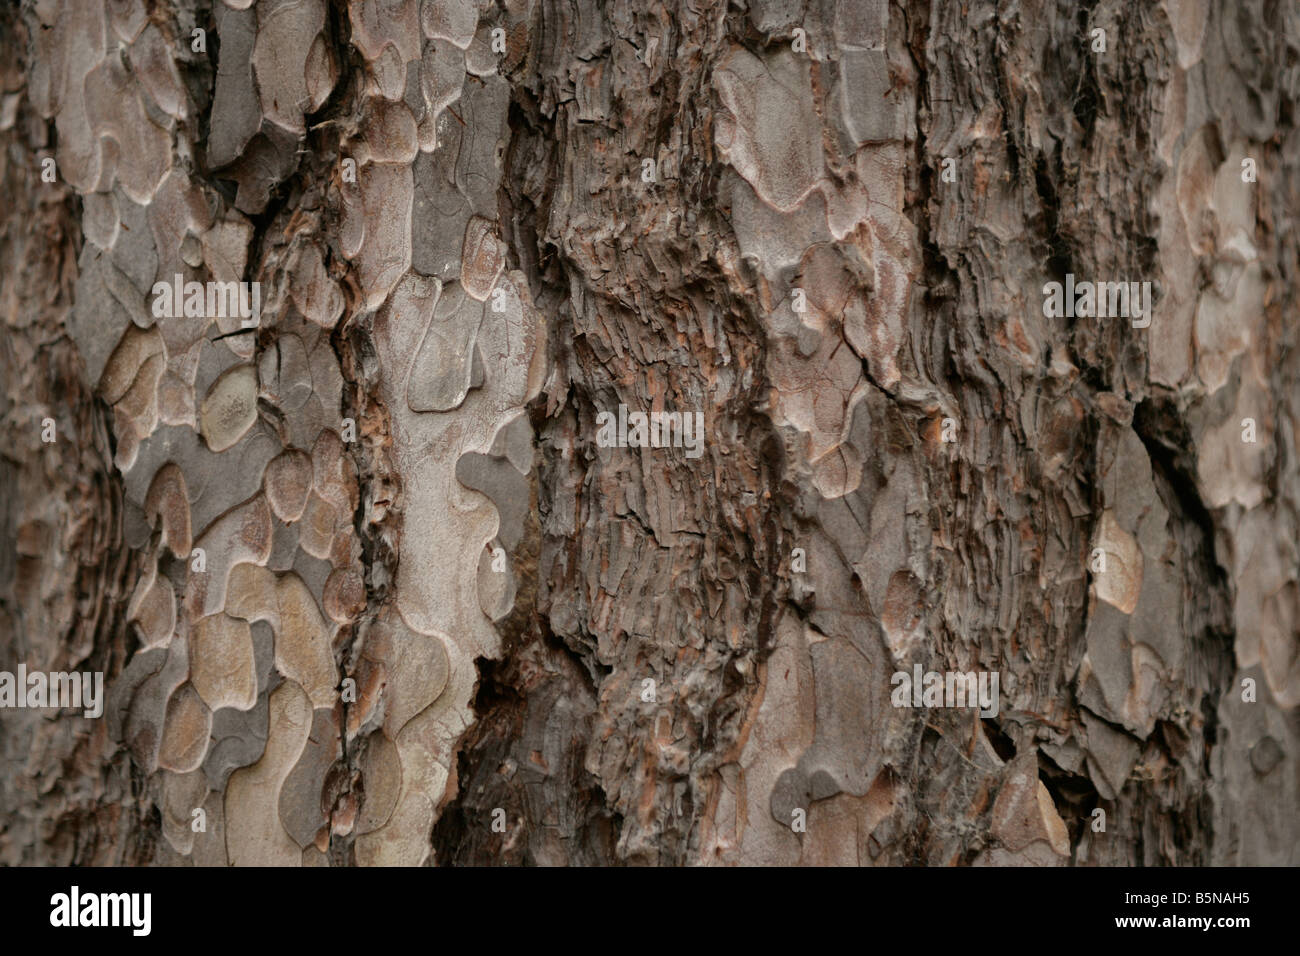 Rough bark on a tree trunk. Stock Photo